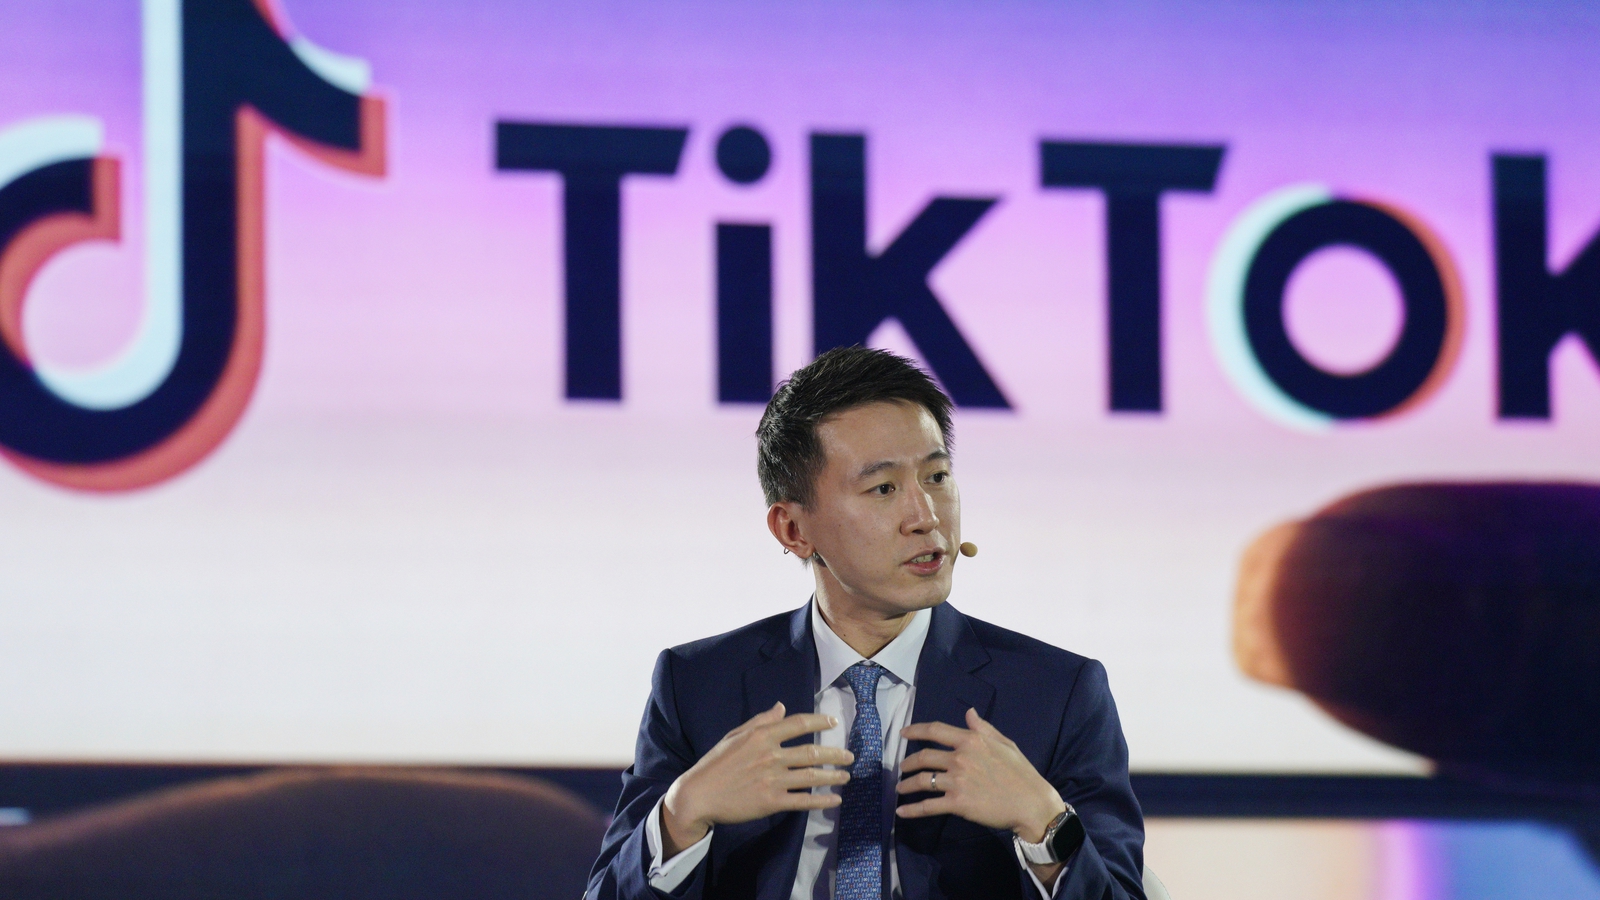 Pivotal moment for TikTok as calls for ban grow